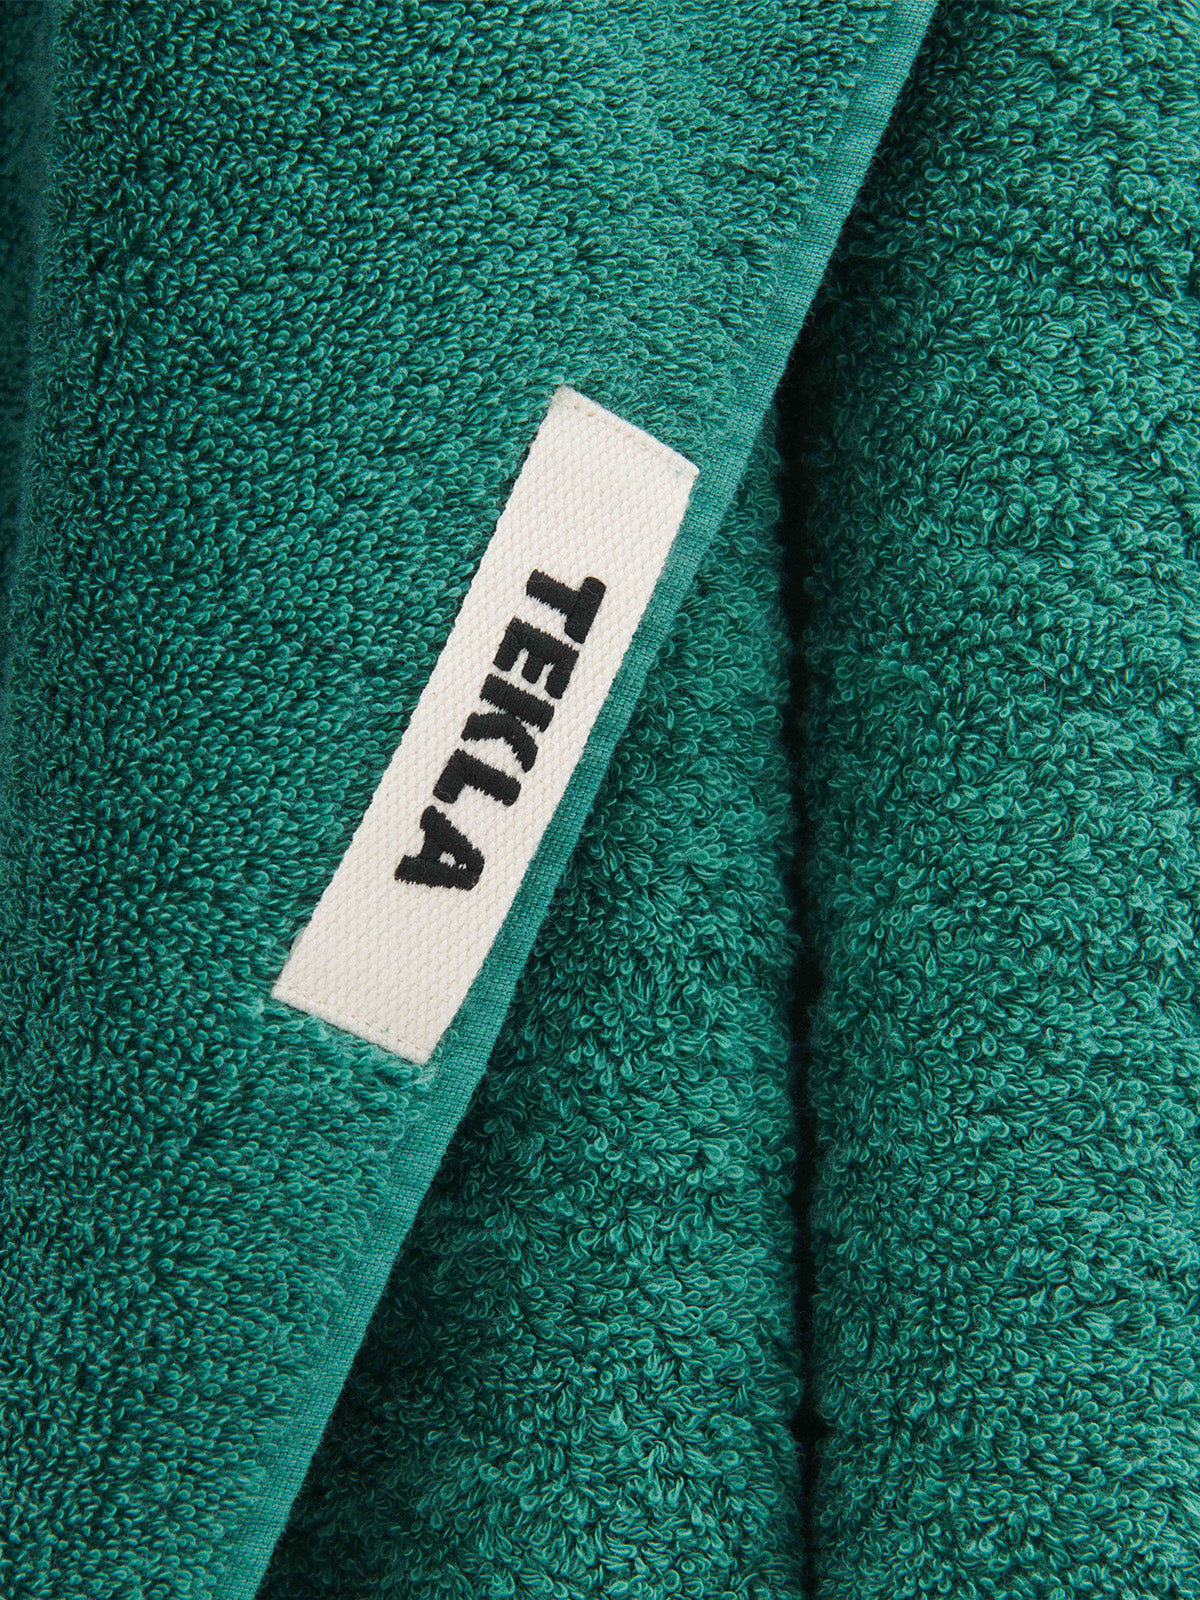 Bath Towel in Teal Green